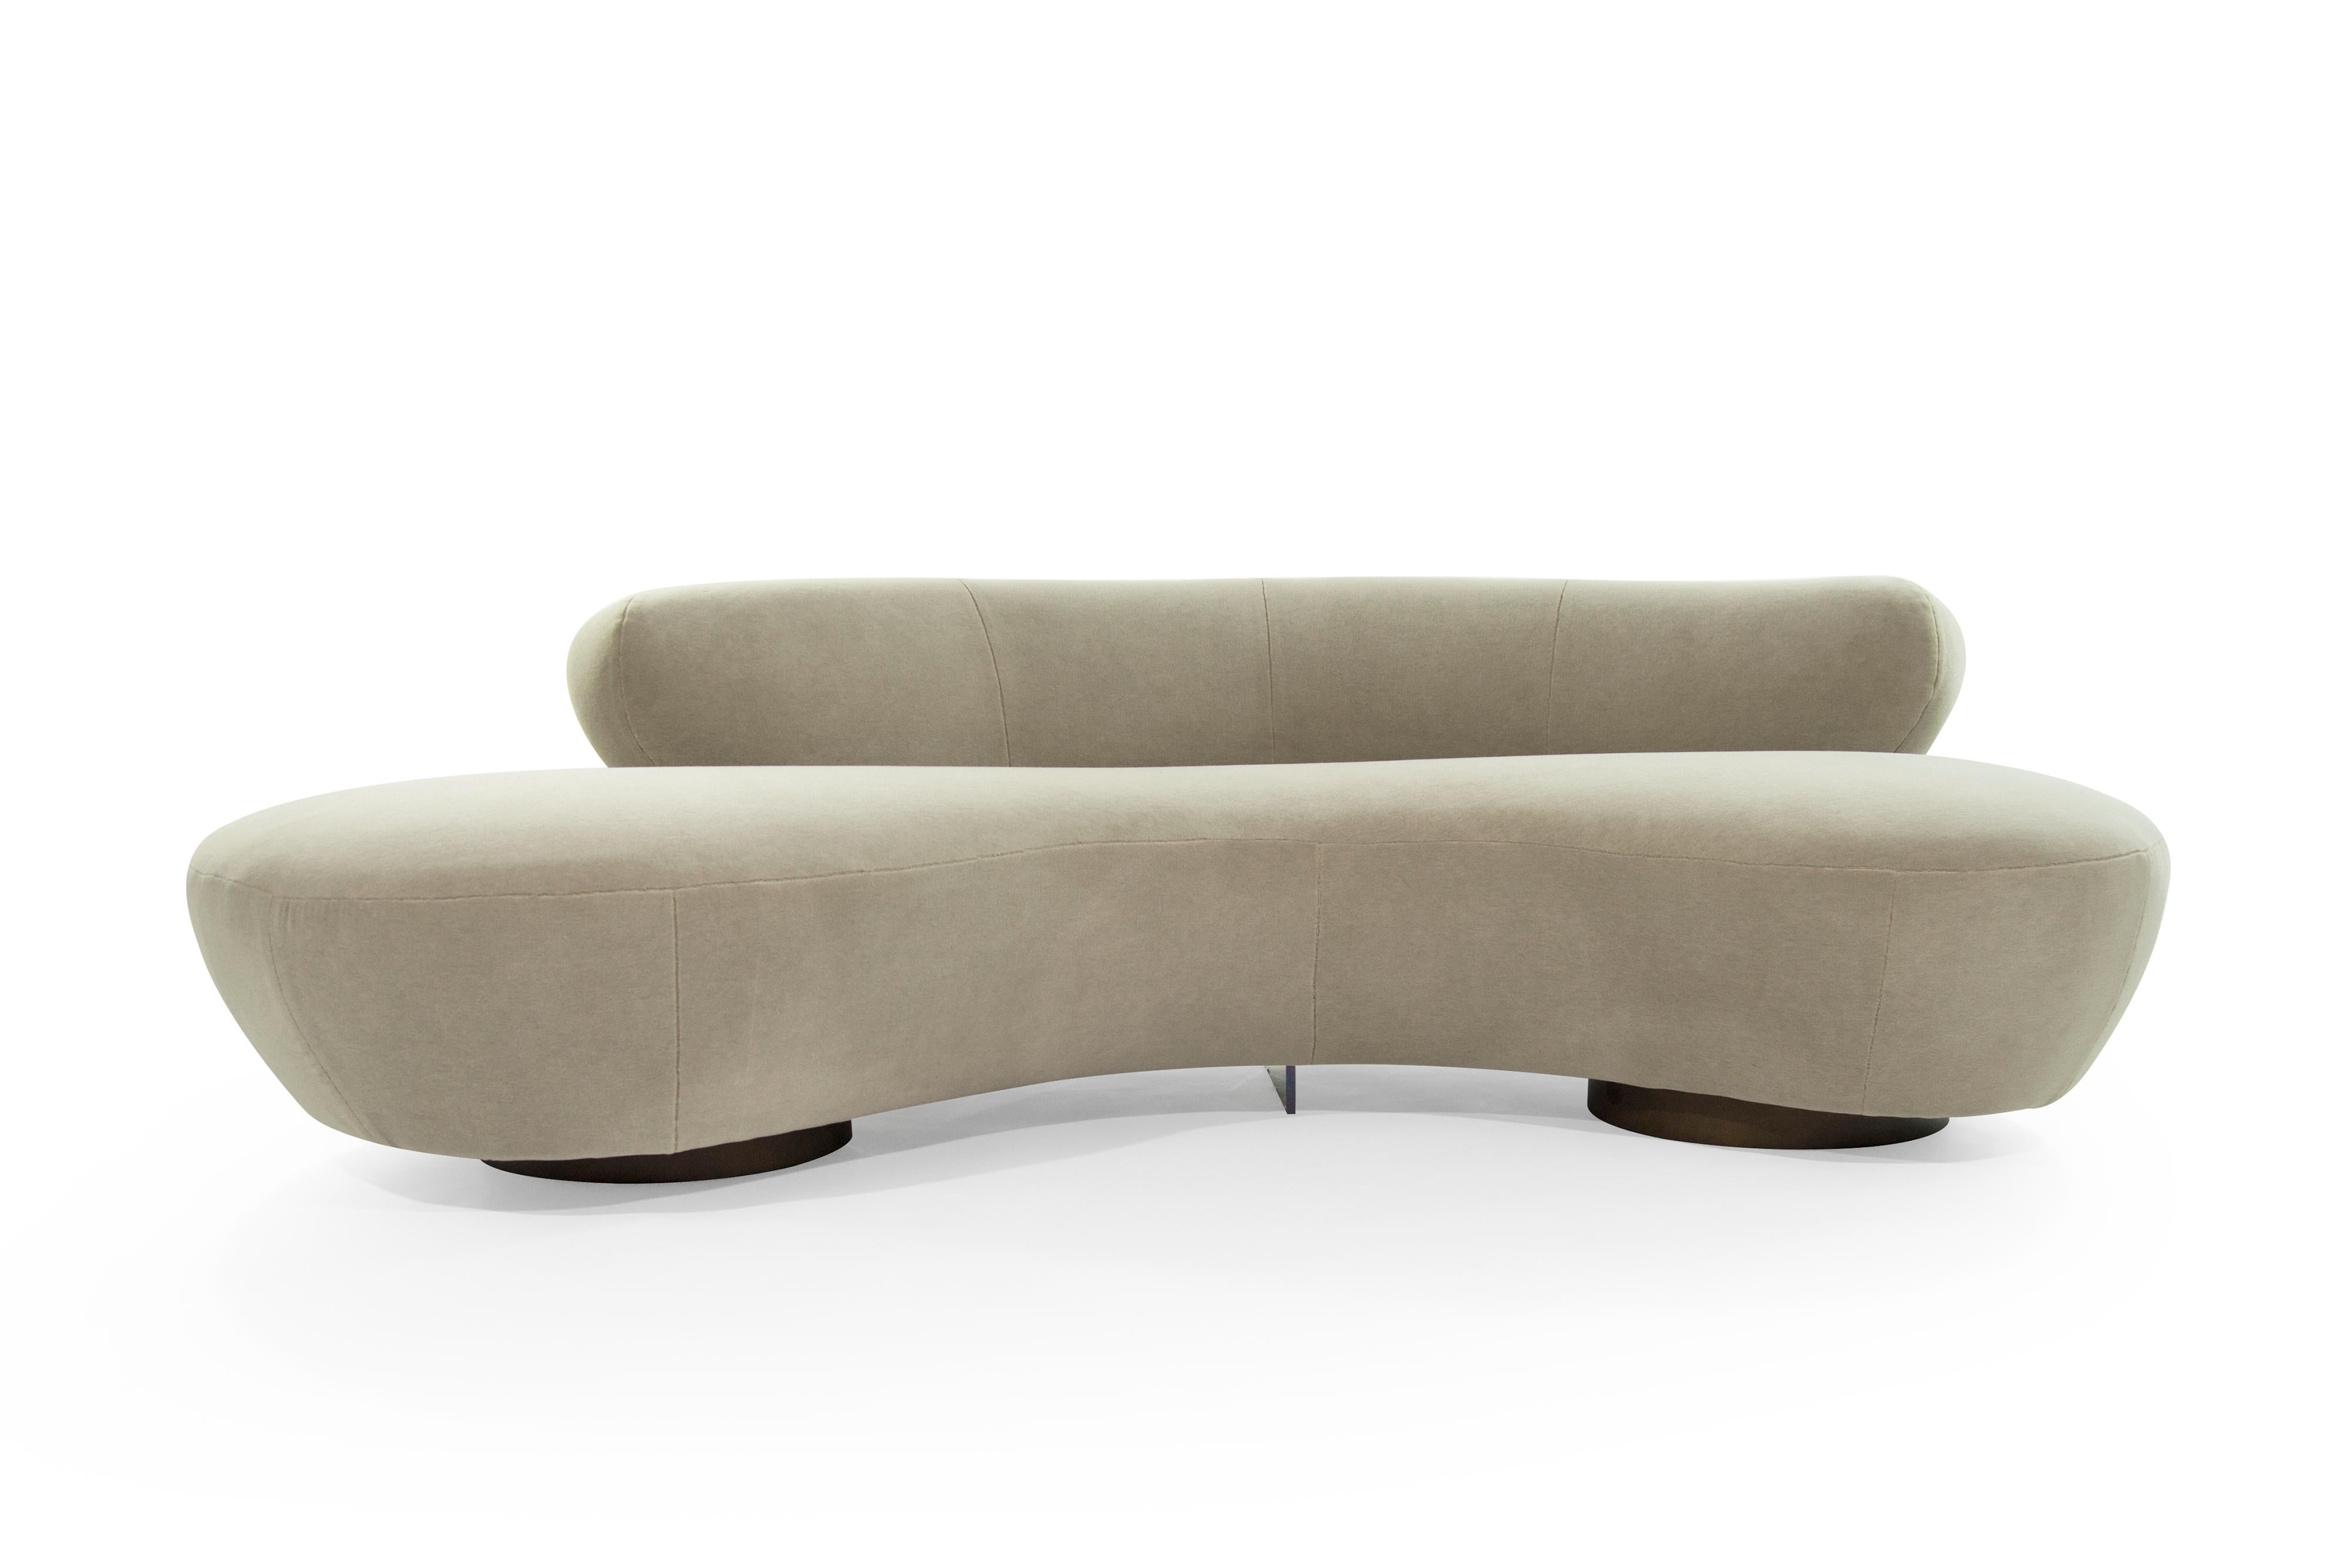 vladimir kagan freeform curved sofa